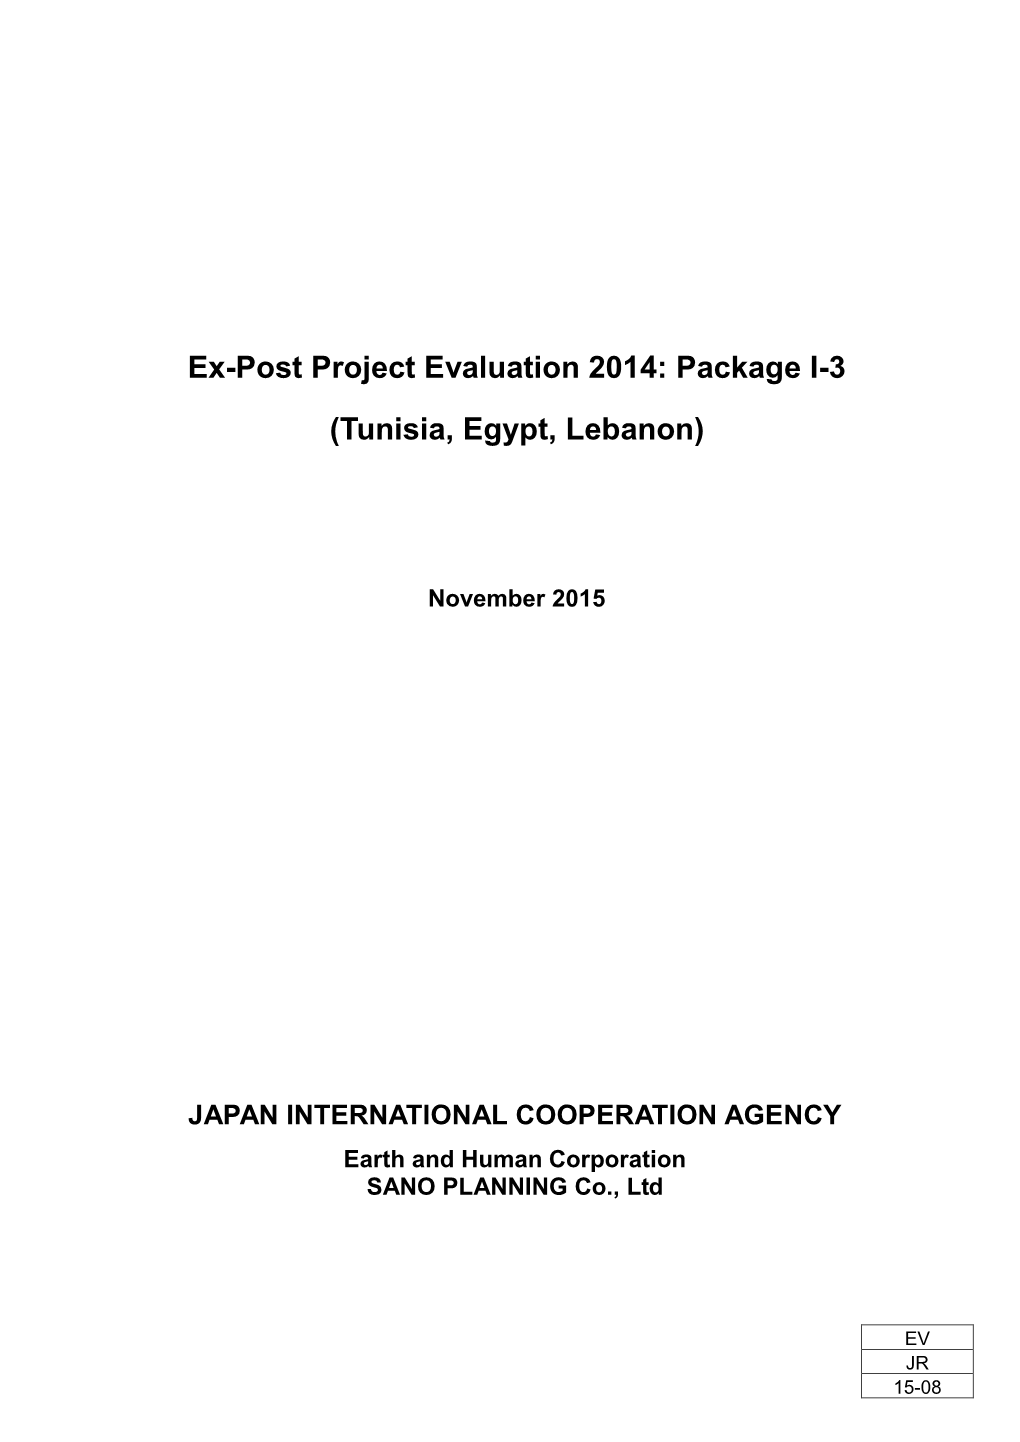 Ex-Post Project Evaluation 2014: Package I-3 (Tunisia, Egypt, Lebanon)